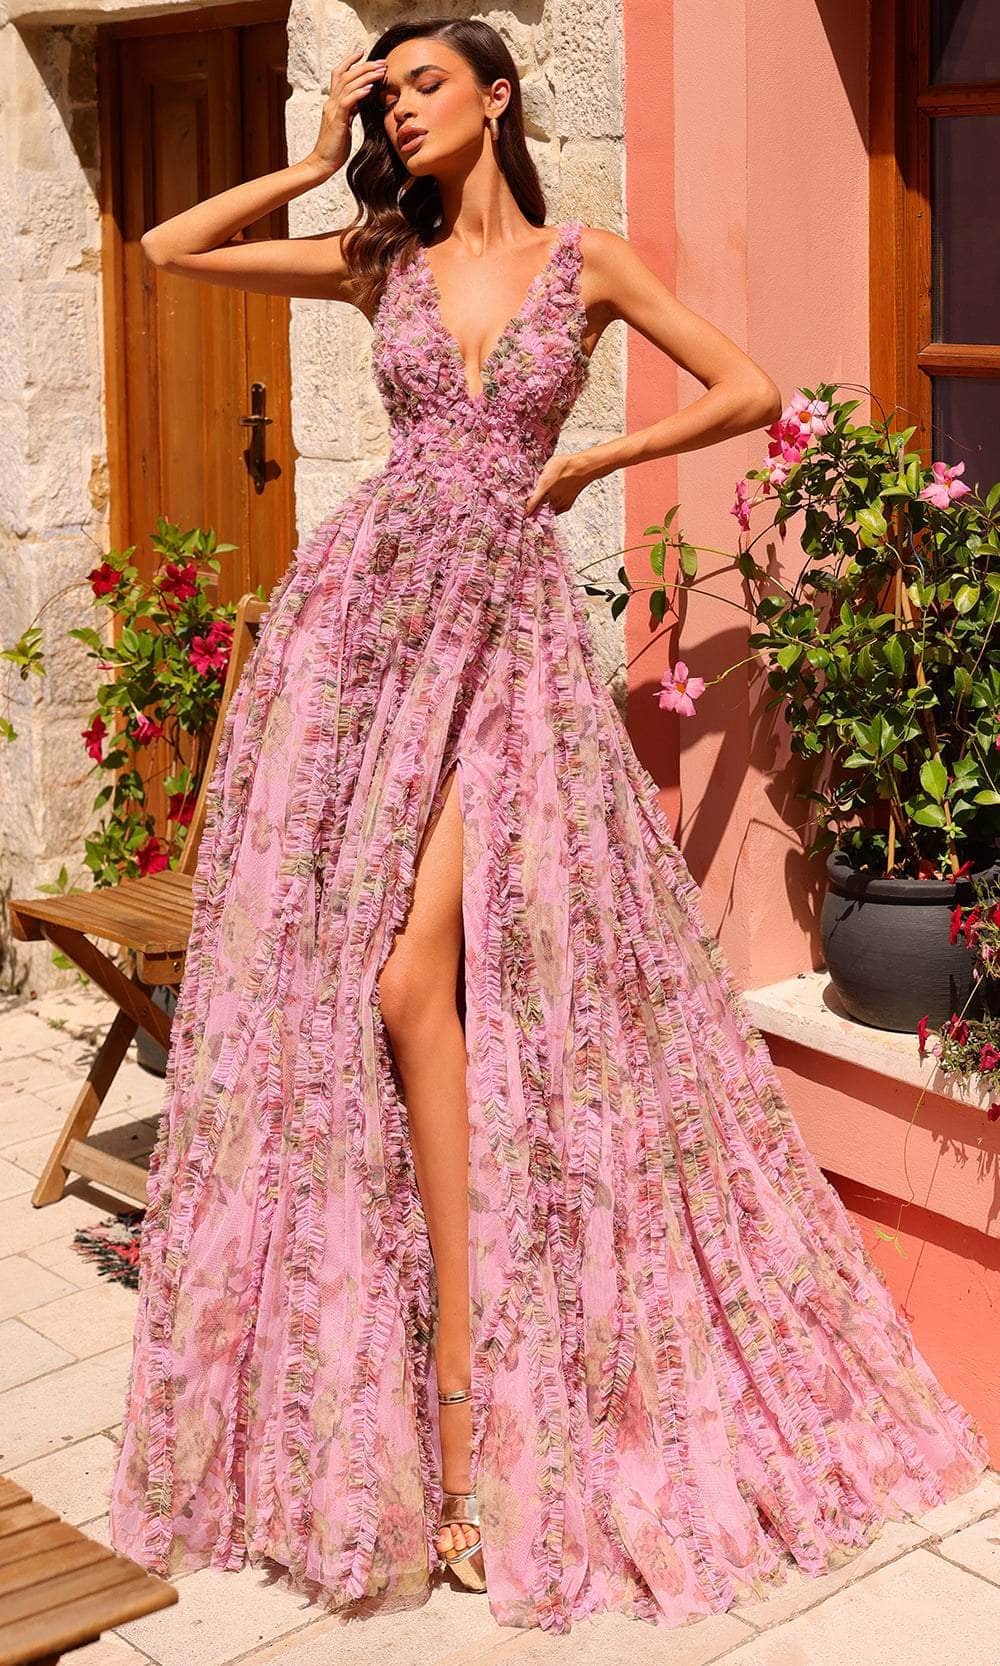 Amarra 88824 - Floral A-Line Prom Dress 000 / Pink/Multi